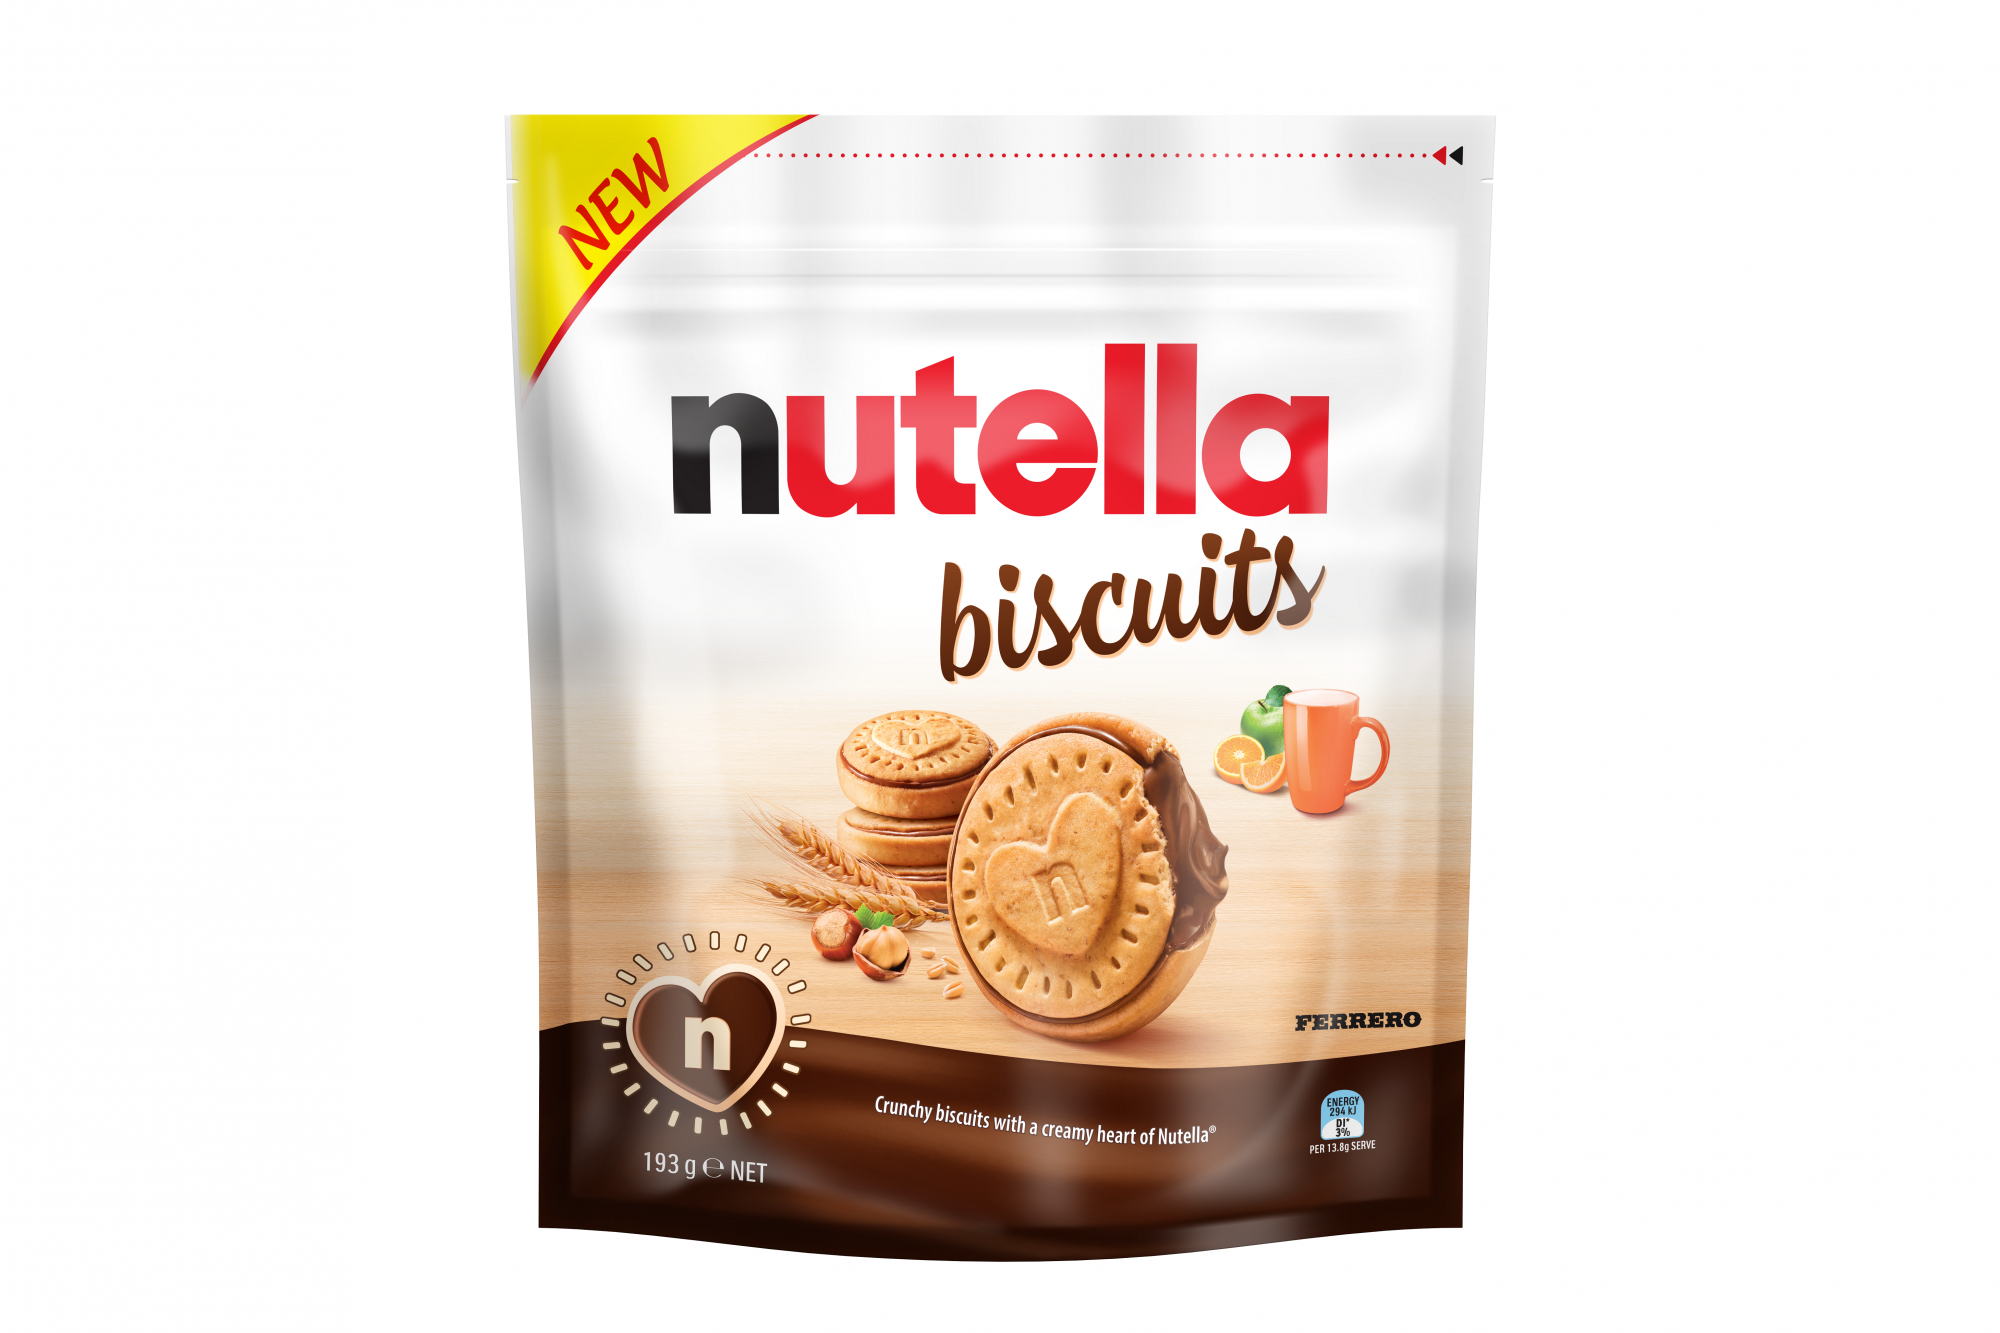 SFER1131 Nutella Biscuit Pack Render 1 1 